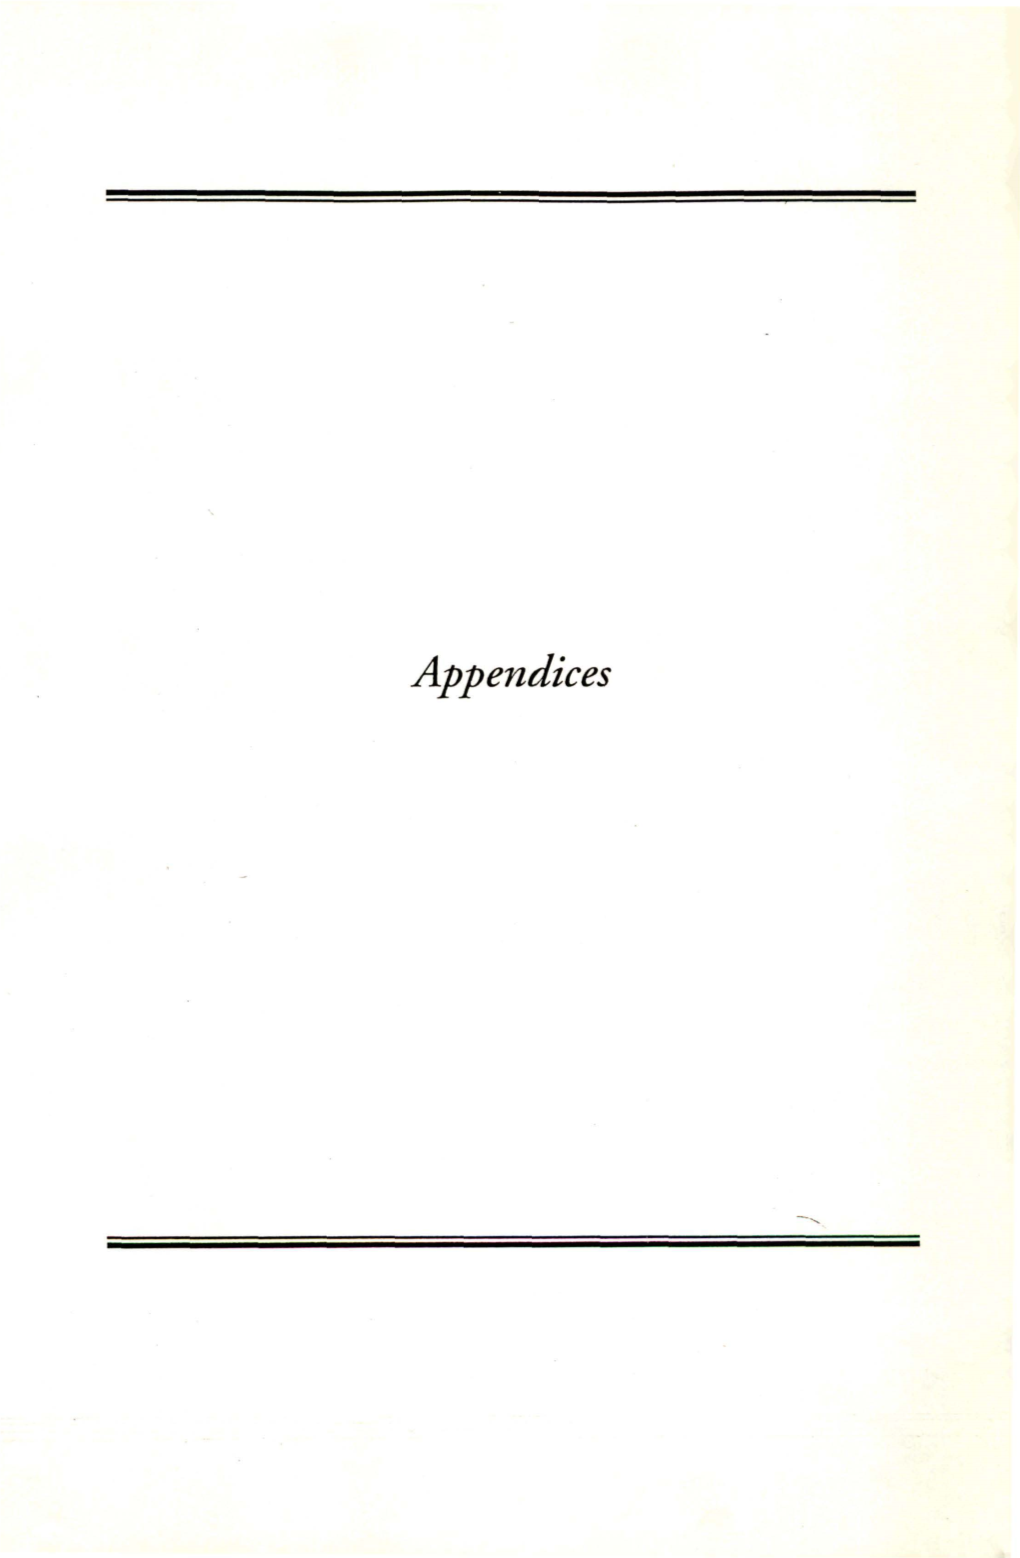 Appendices XII